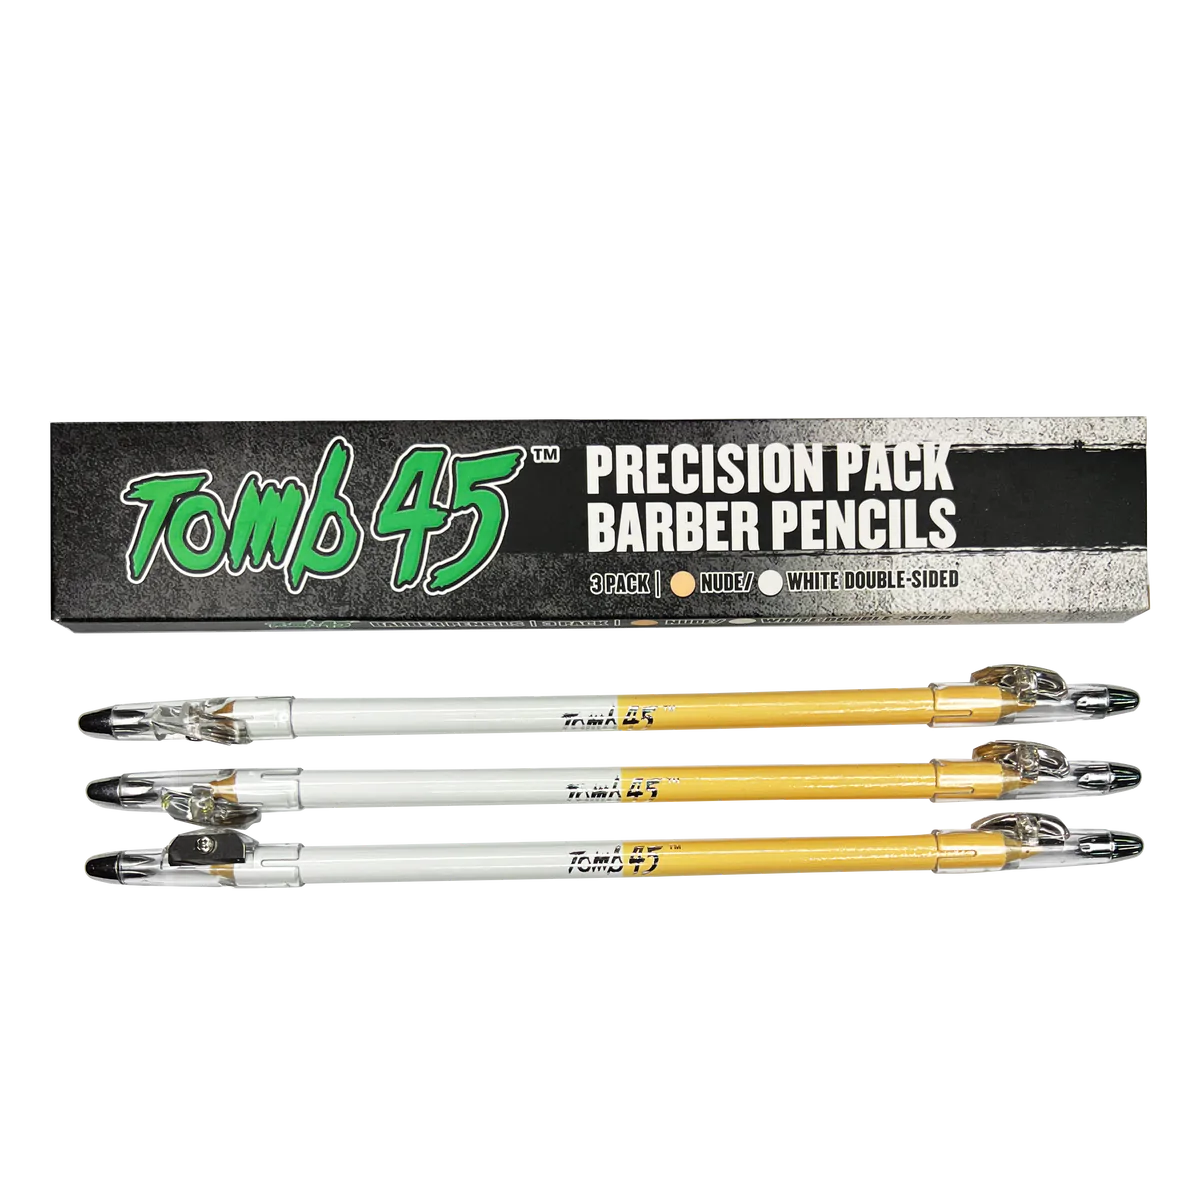 Tomb45?? Barber Pencil Precision 3 Pack